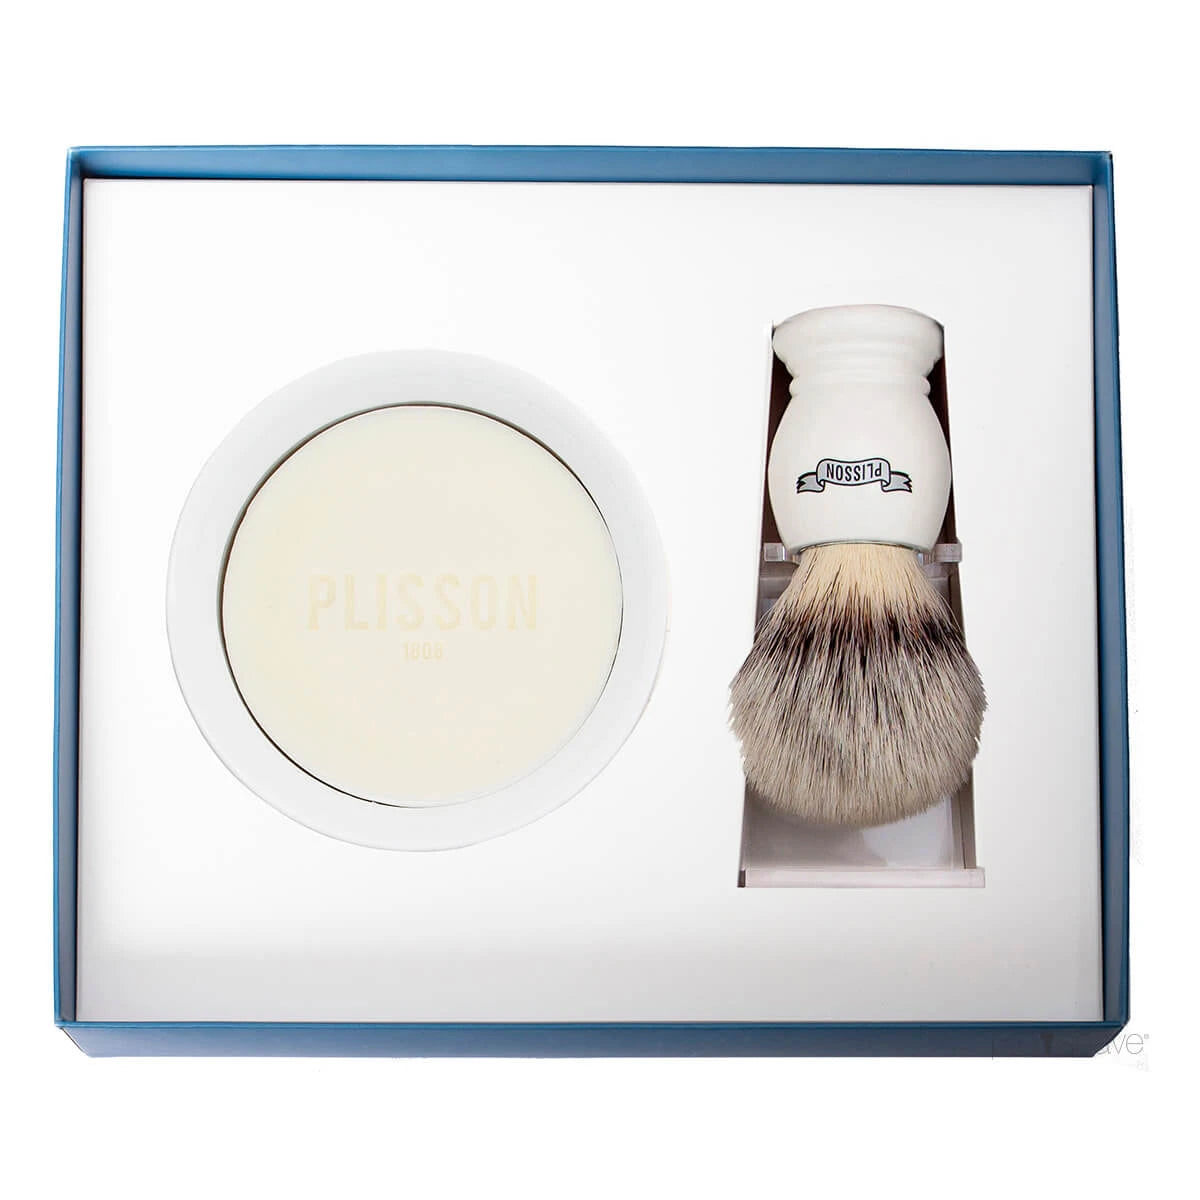 Plisson Starter Kit, High Mountain White Fibre & Shaving Bowl W/Soap